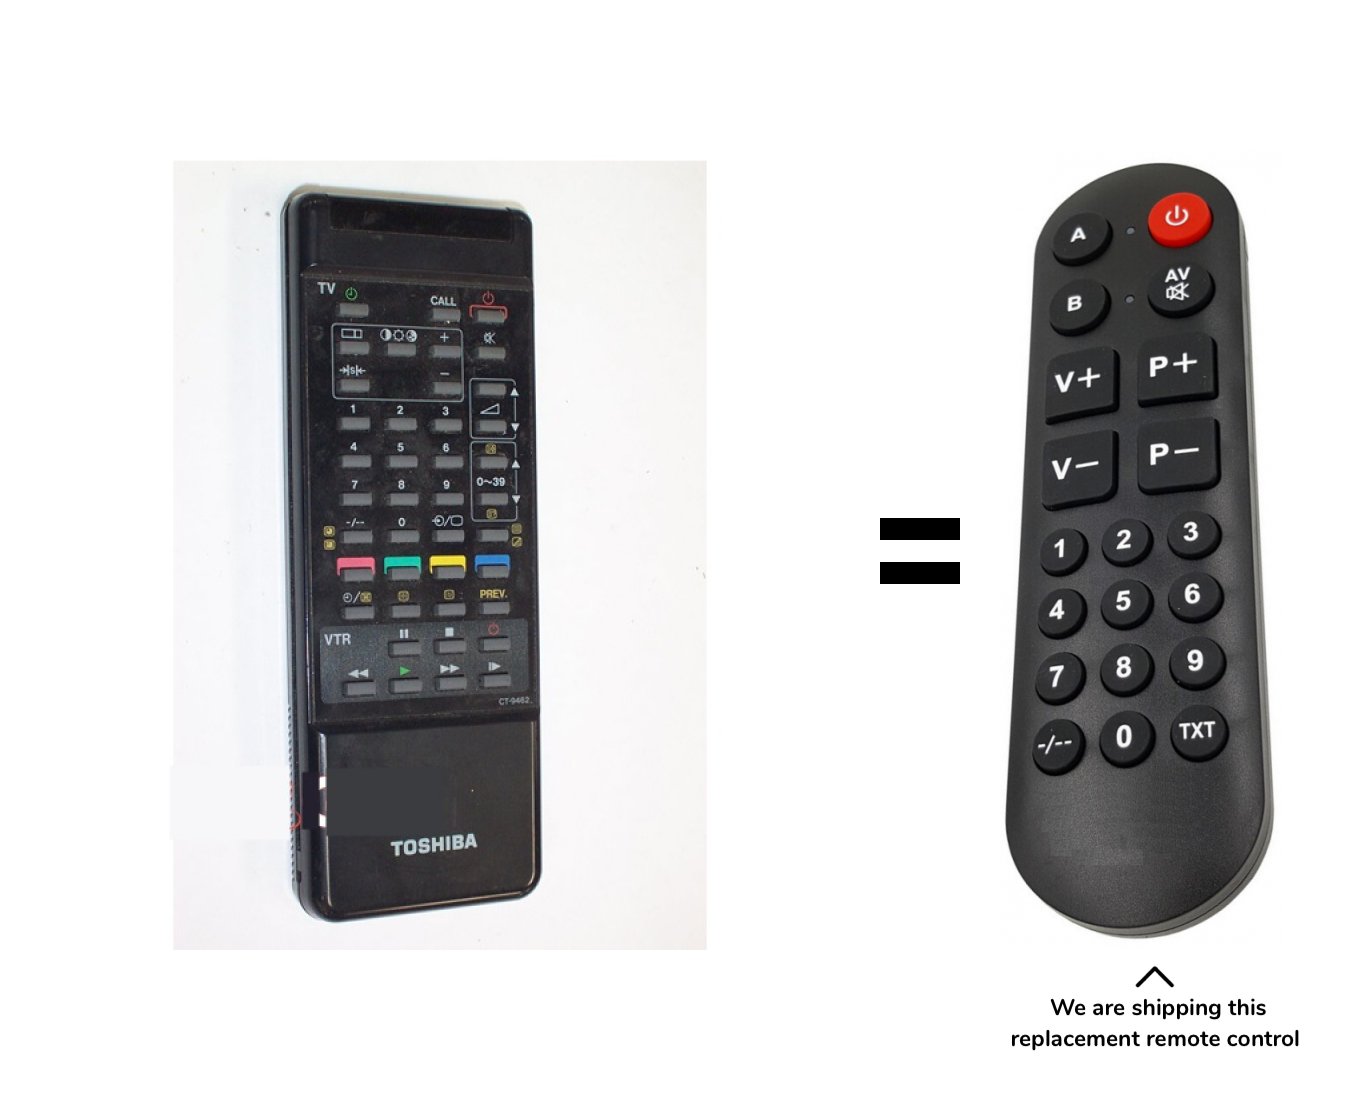 Toshiba 2100TD(TS) remote control for seniors